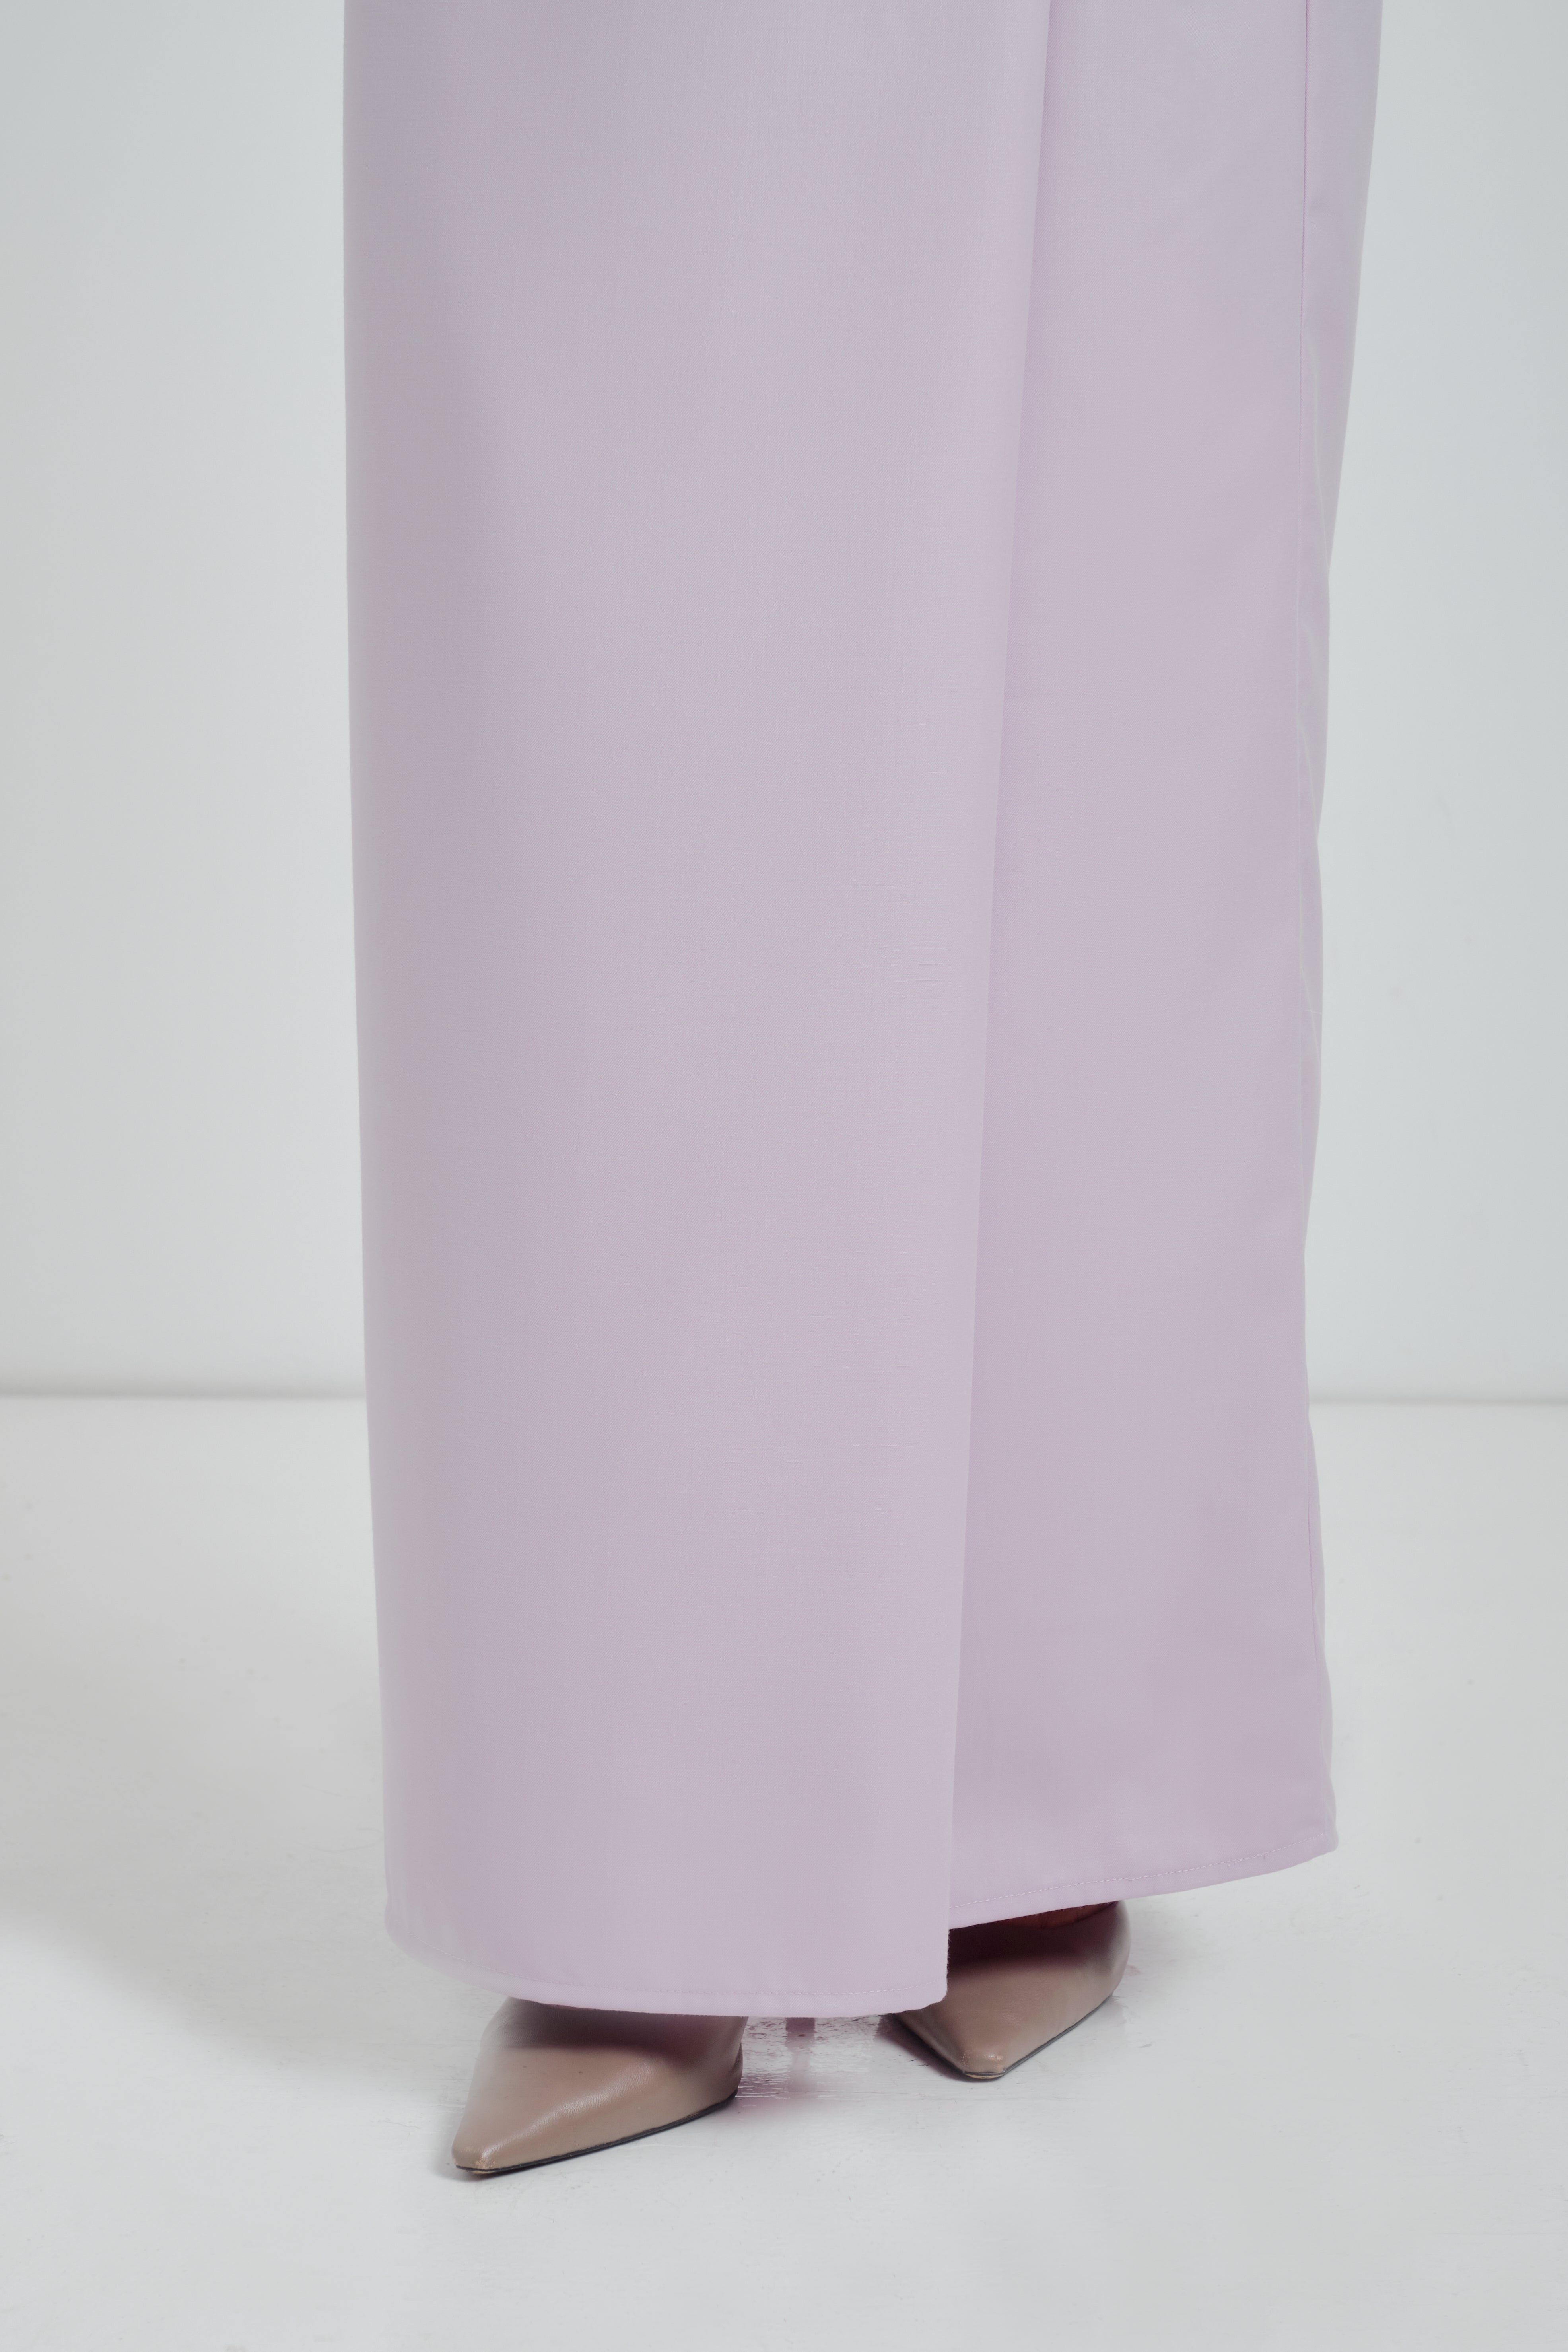 Patawali Baju Kurung - Thistle Purple